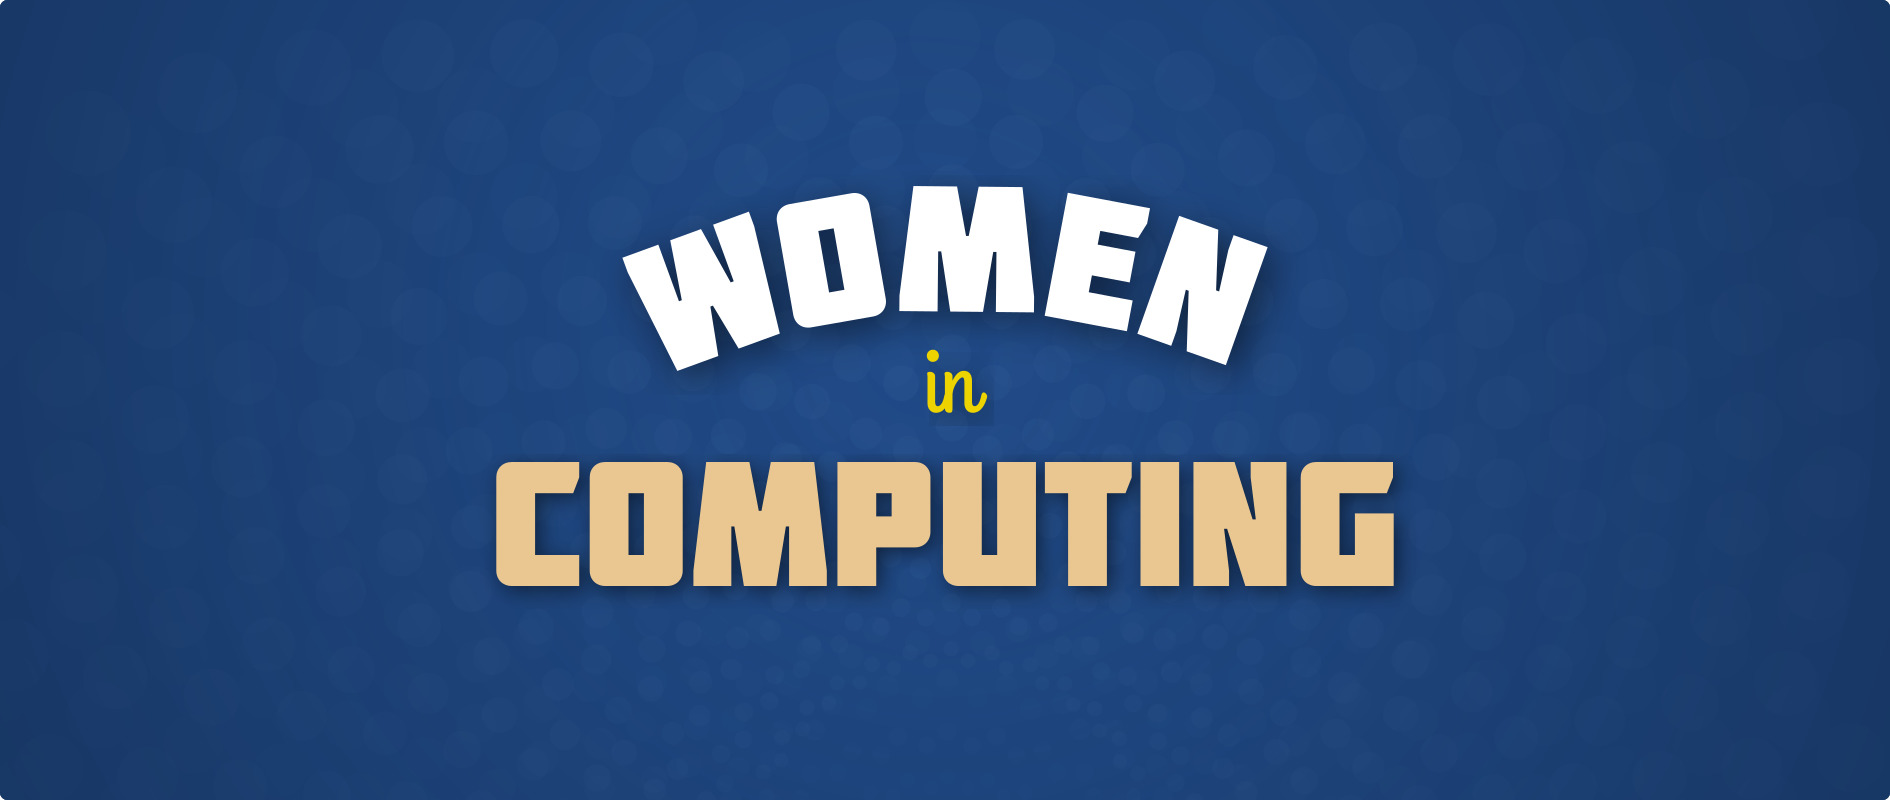 Women in Computing and Fedora